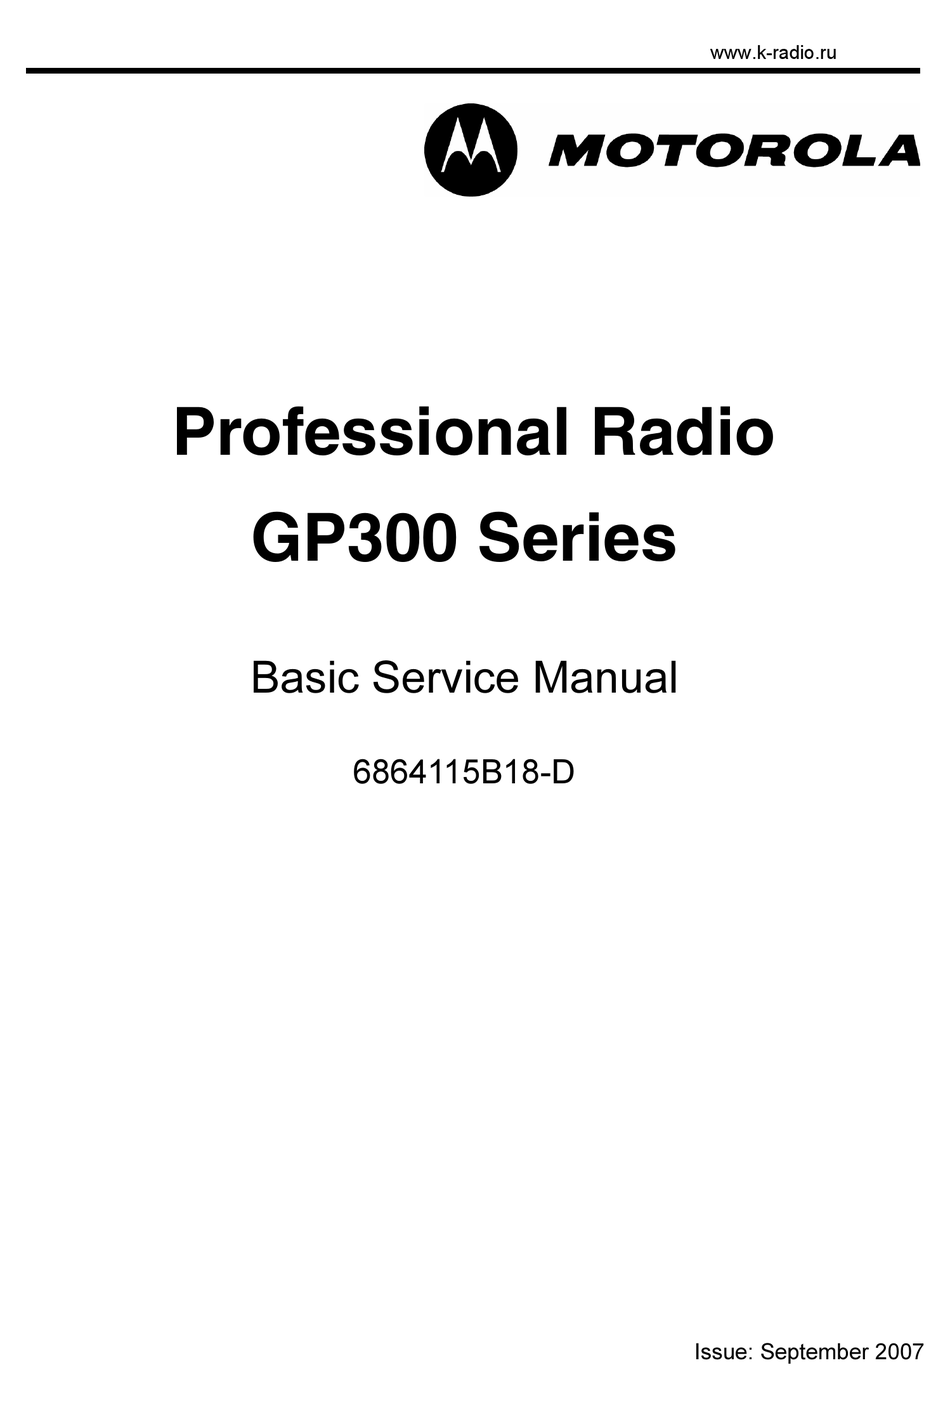 Motorola Professional Radio Cps Software Download